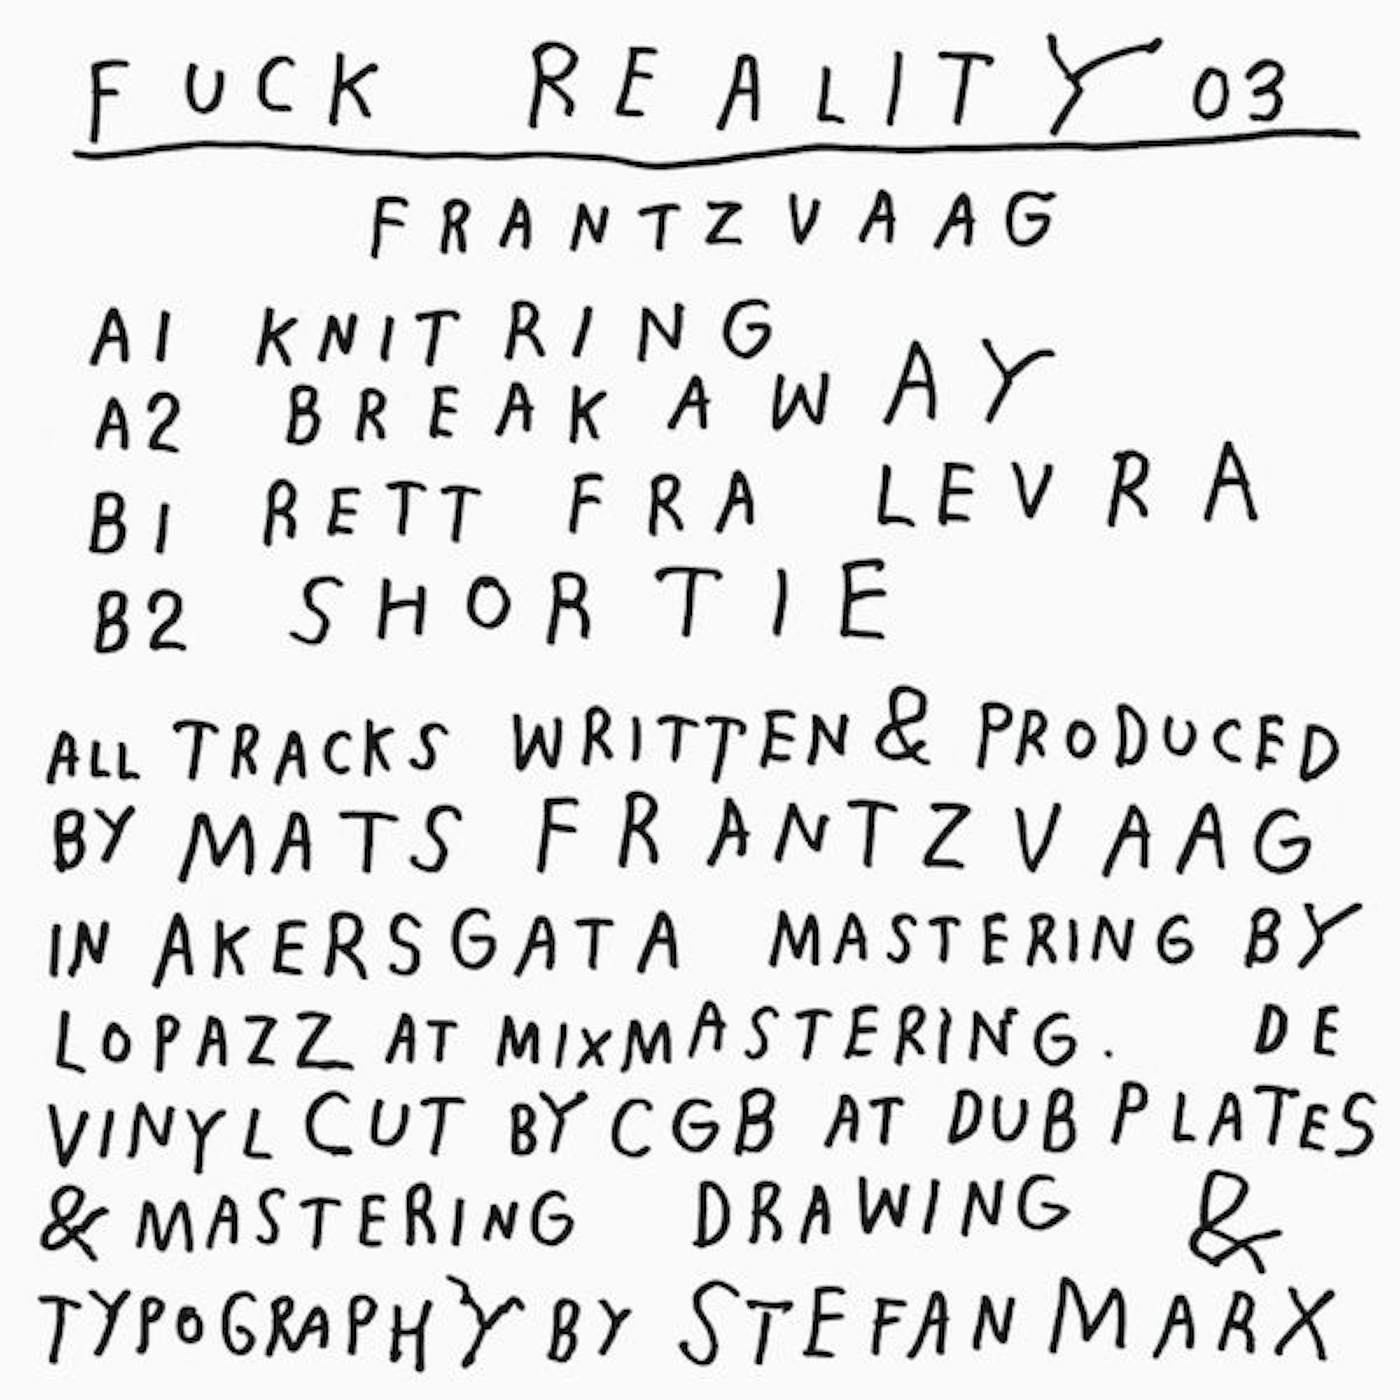 Frantzvaag FUCK REALITY 03 Vinyl Record